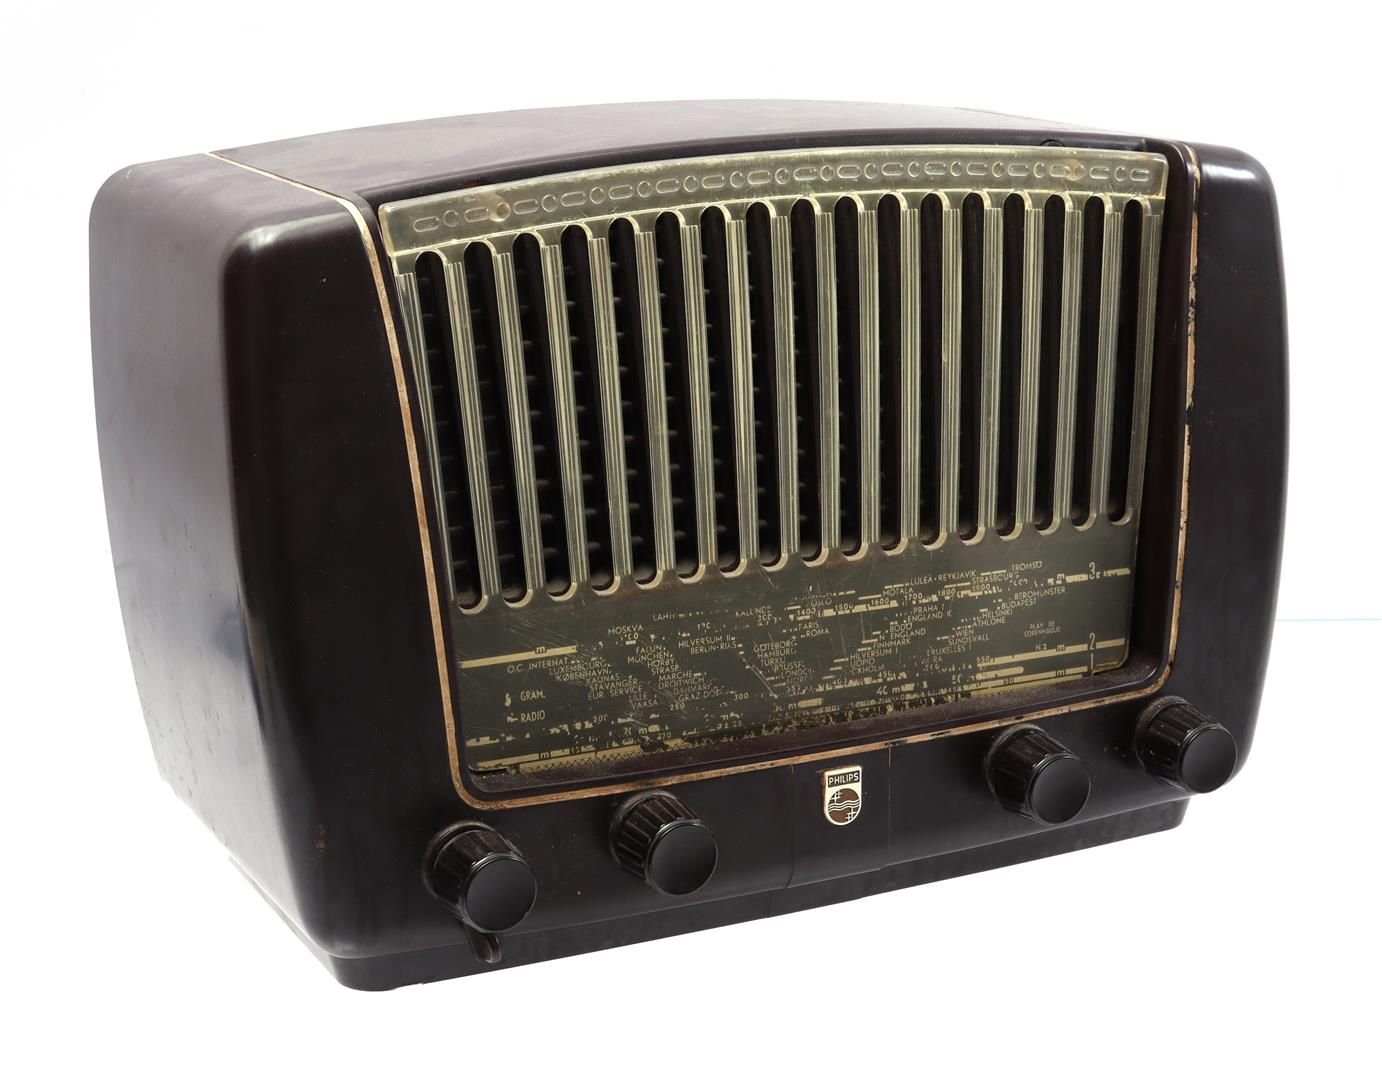 Philips BX310 bakelite radio Radio de baquelita Philips BX310, 37 cm de ancho